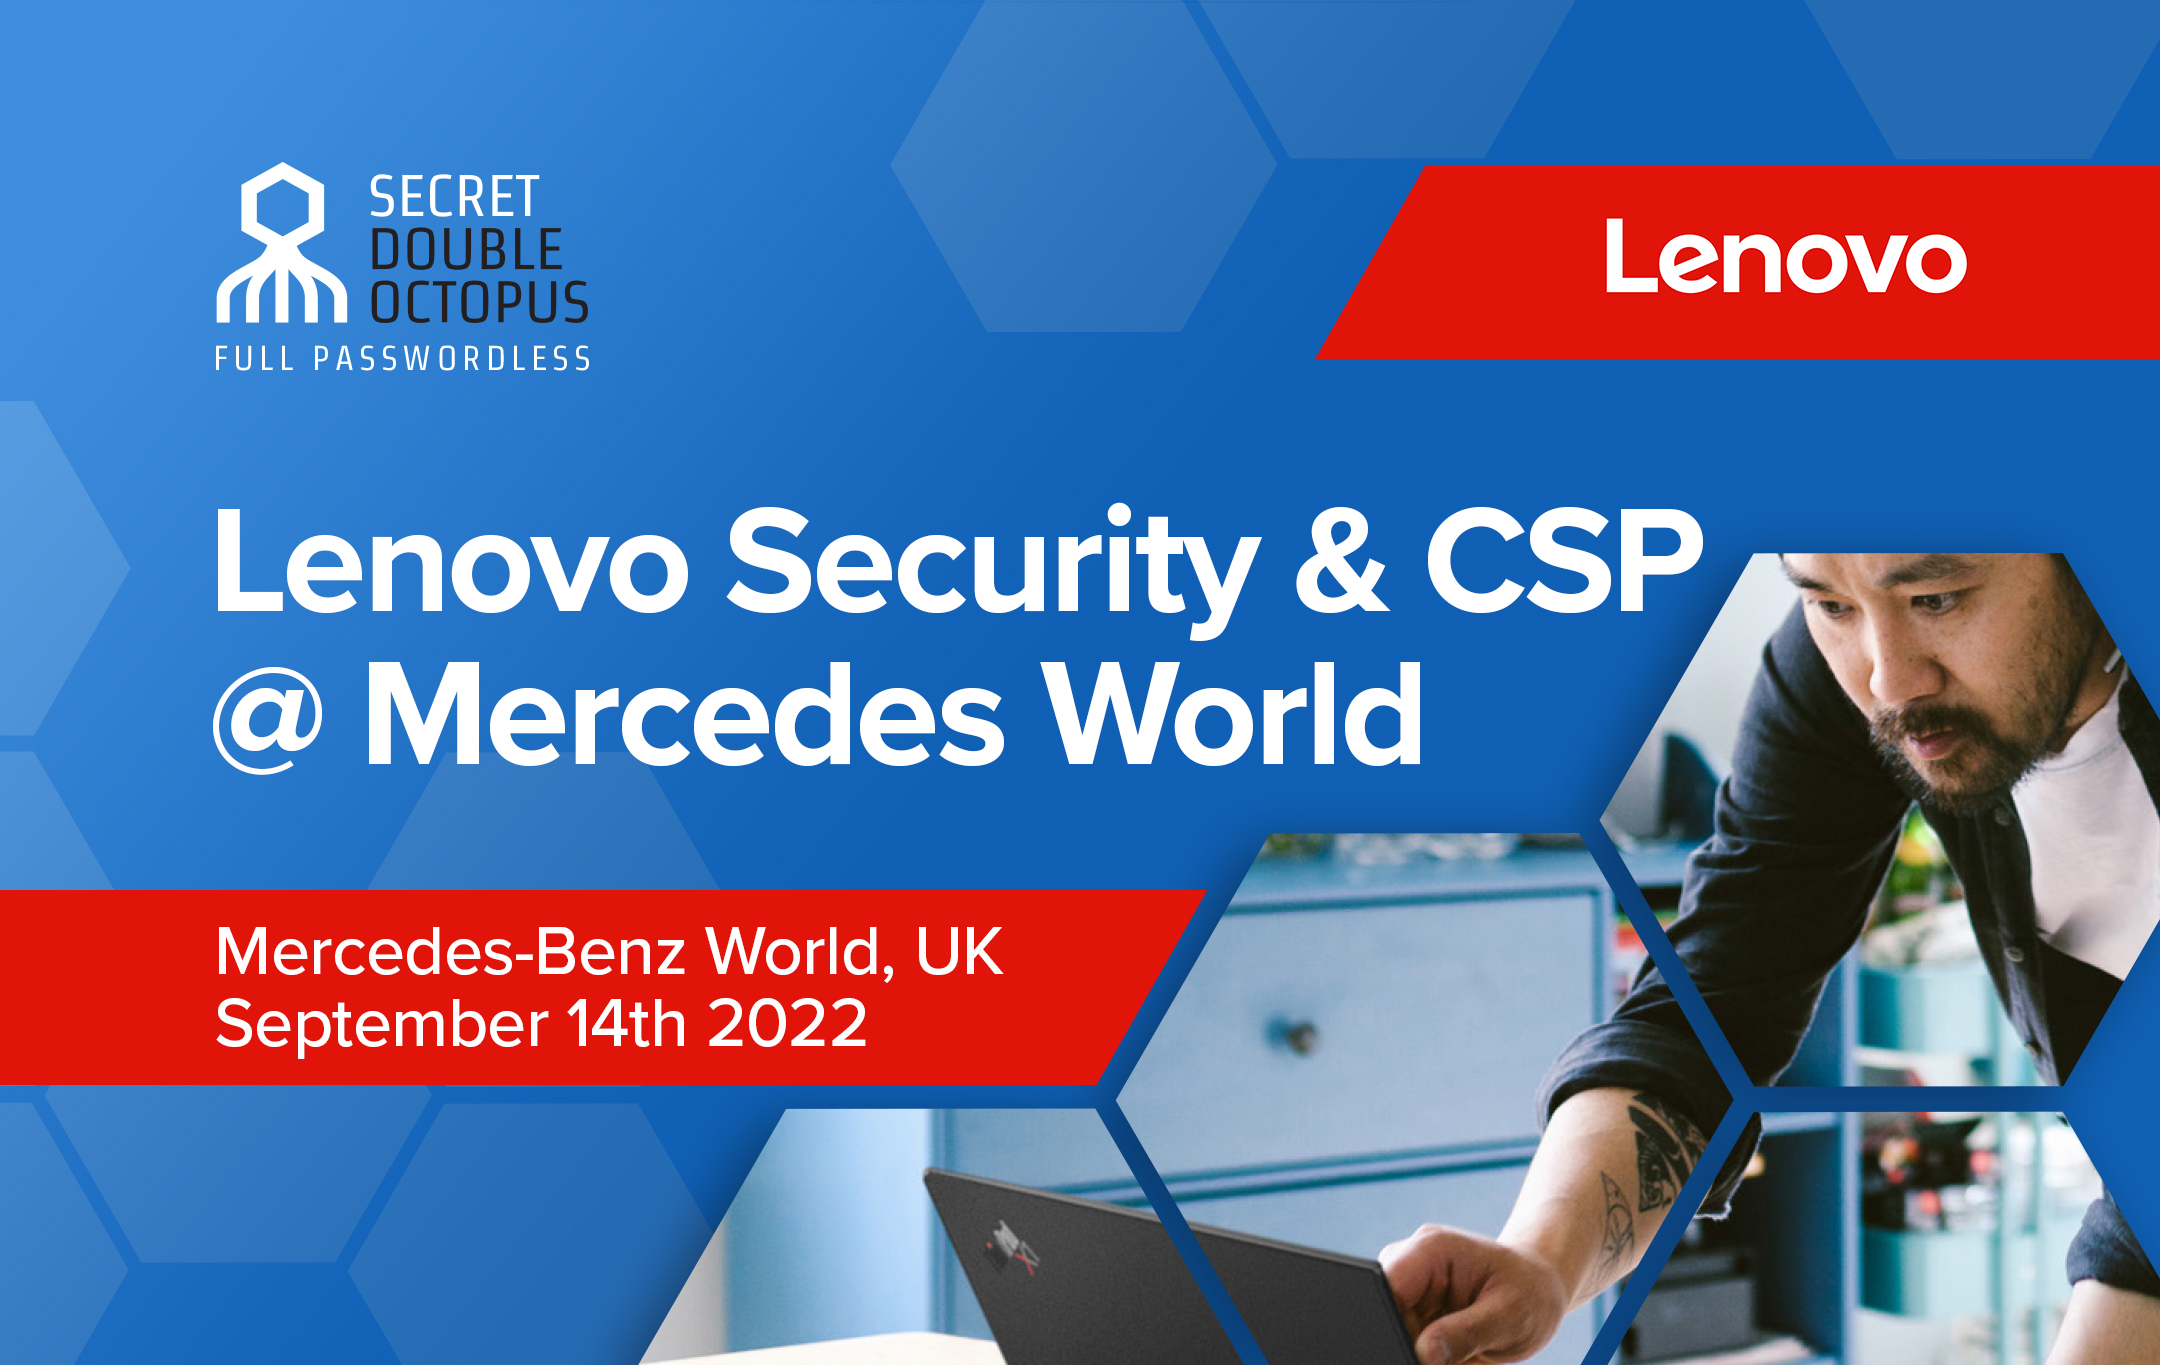 Levono security & CSP @ Mercedes World